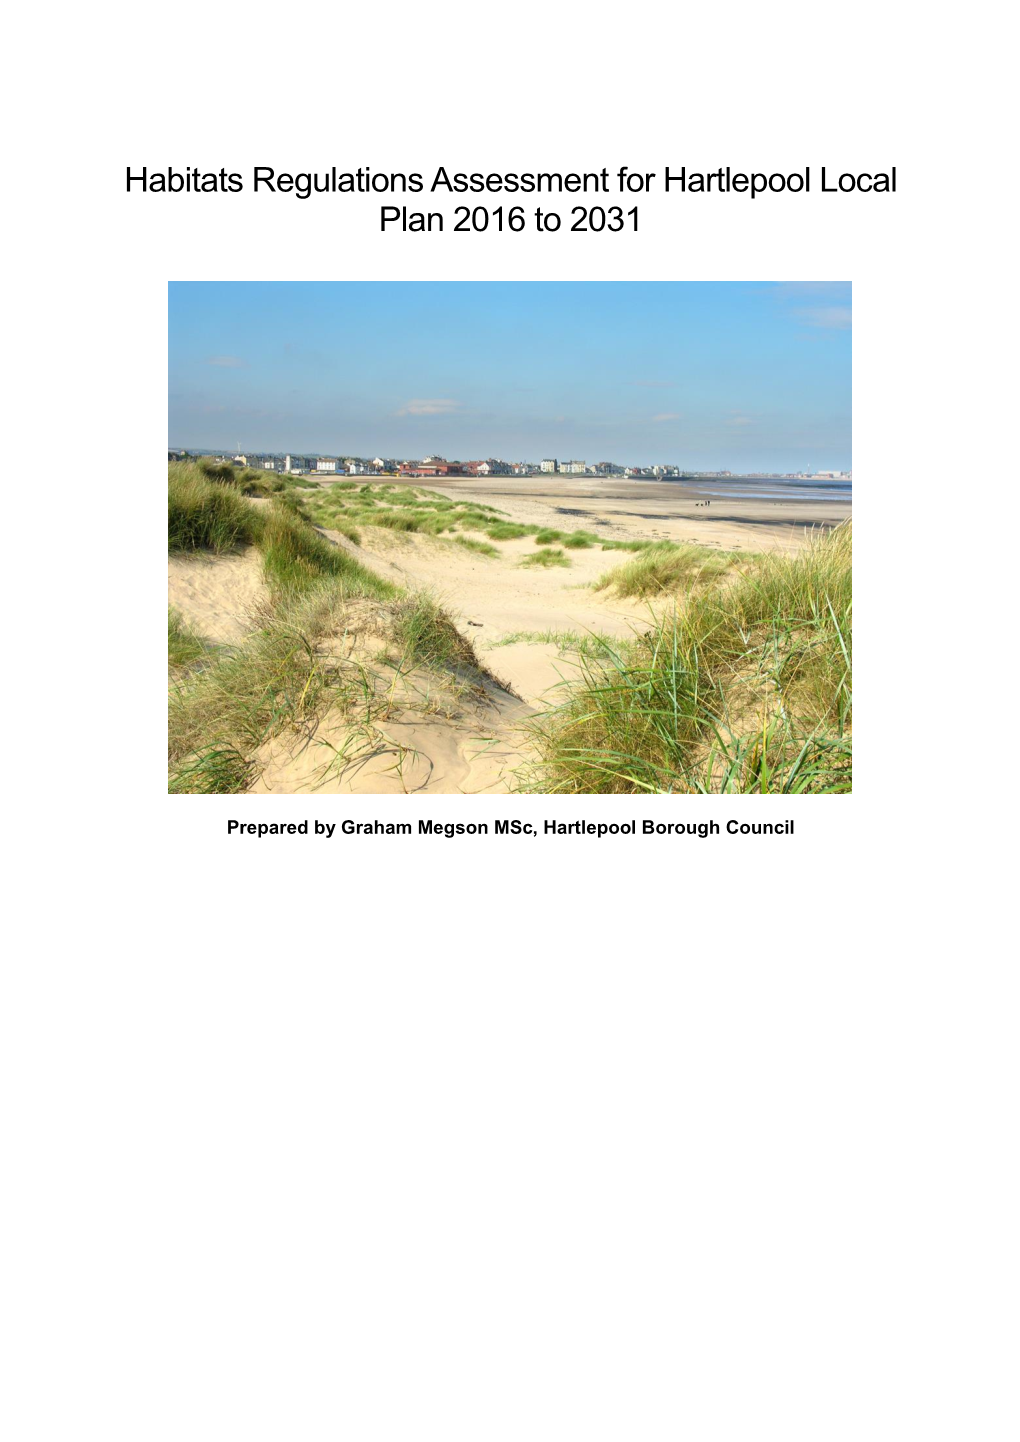 Hartlepool Local Plan Habitats Regulations